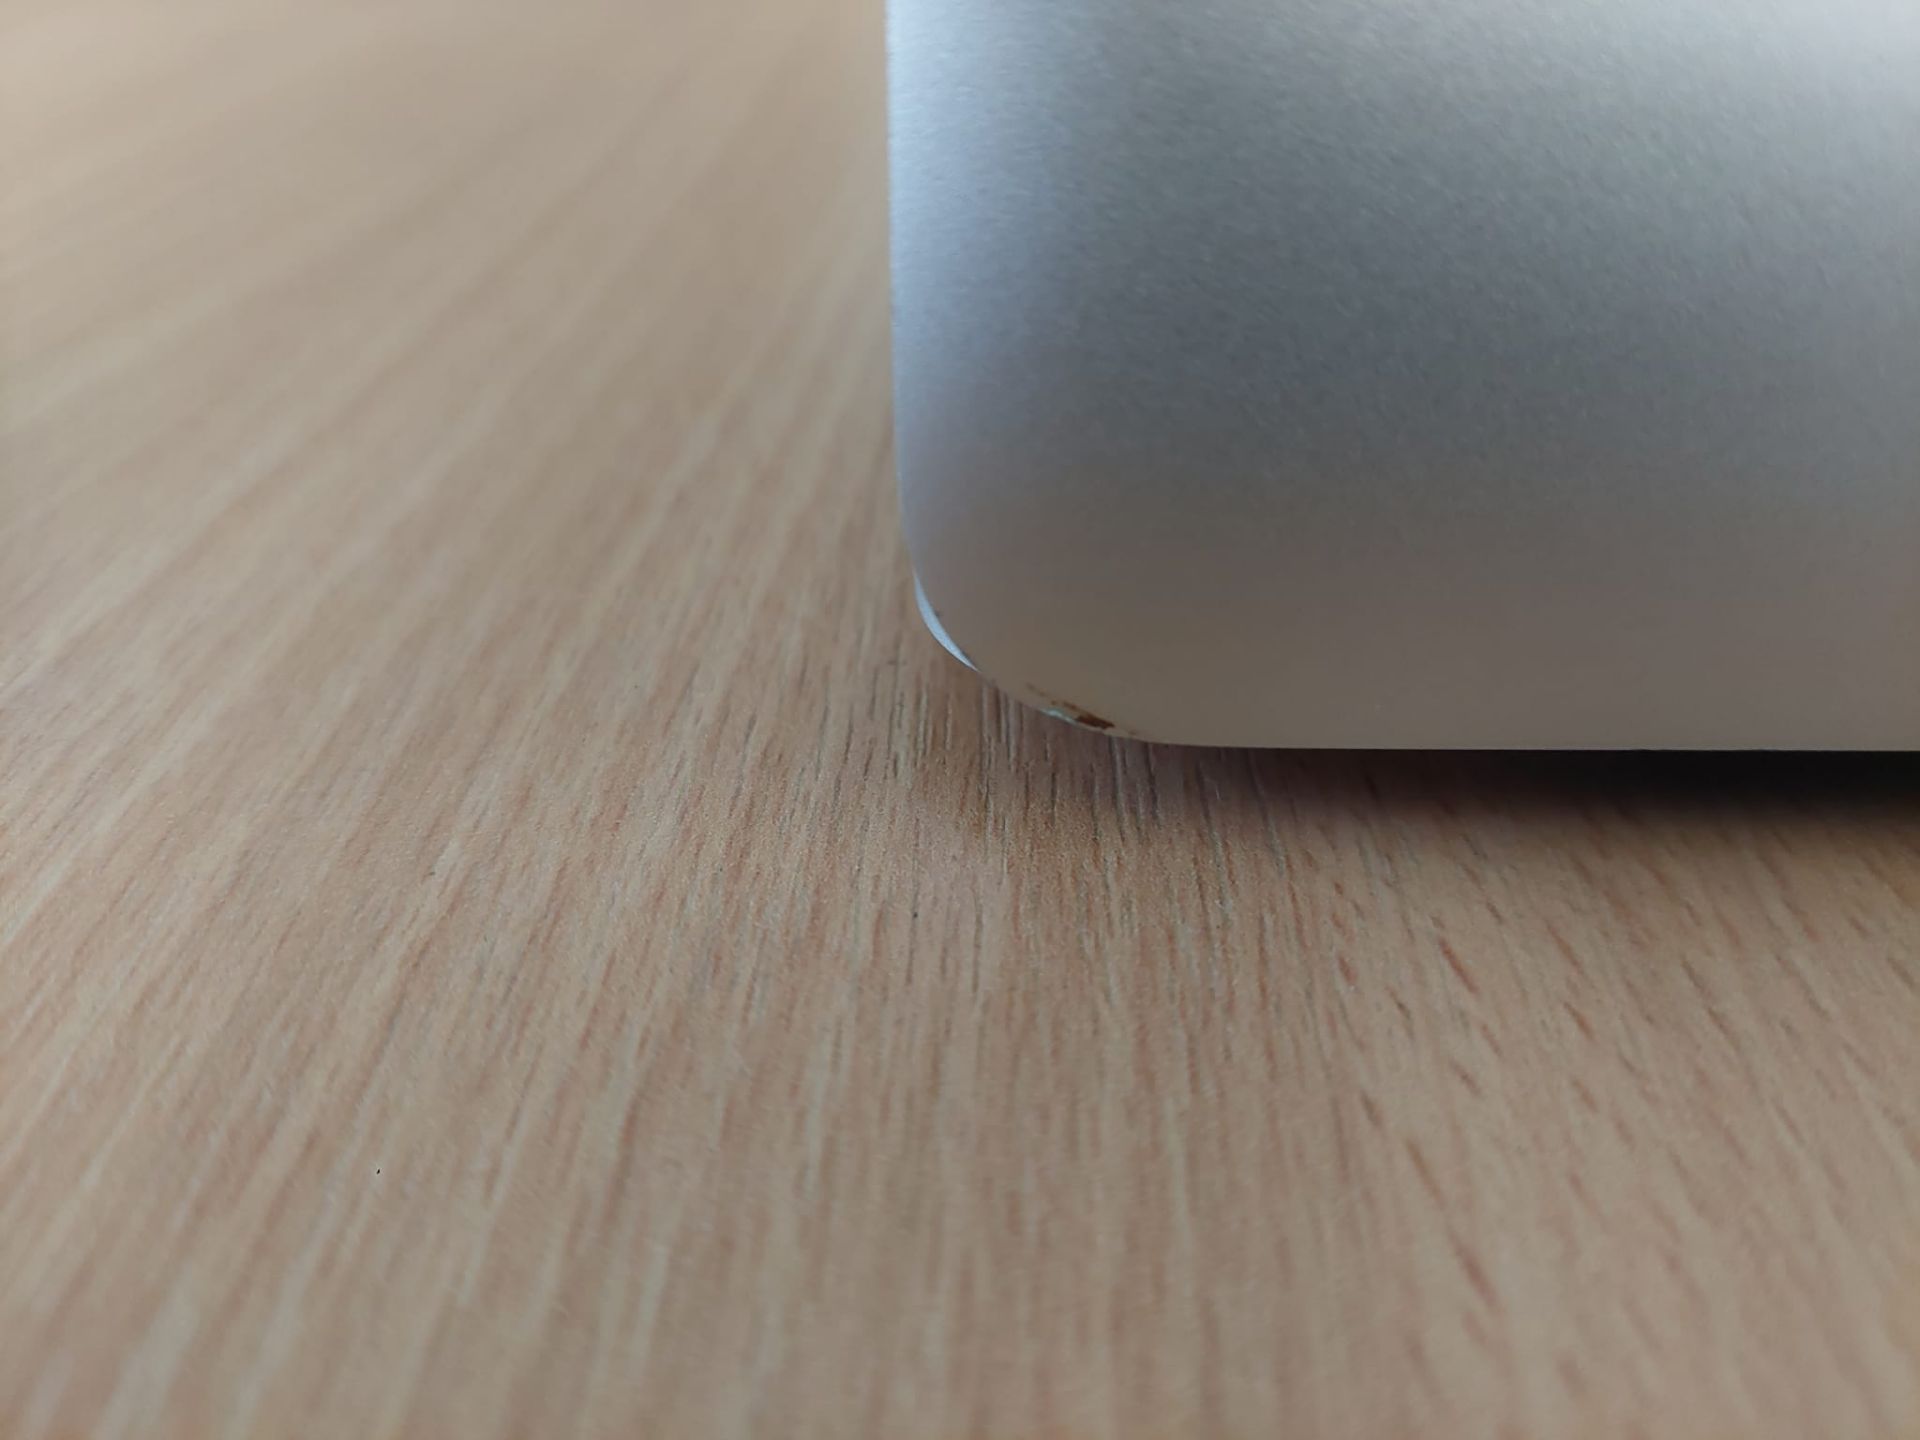 Apple 2015 Macbook Air w/ 13 Inch Display and Dual Core Intel i5 CPU *NO VAT* - Image 6 of 17